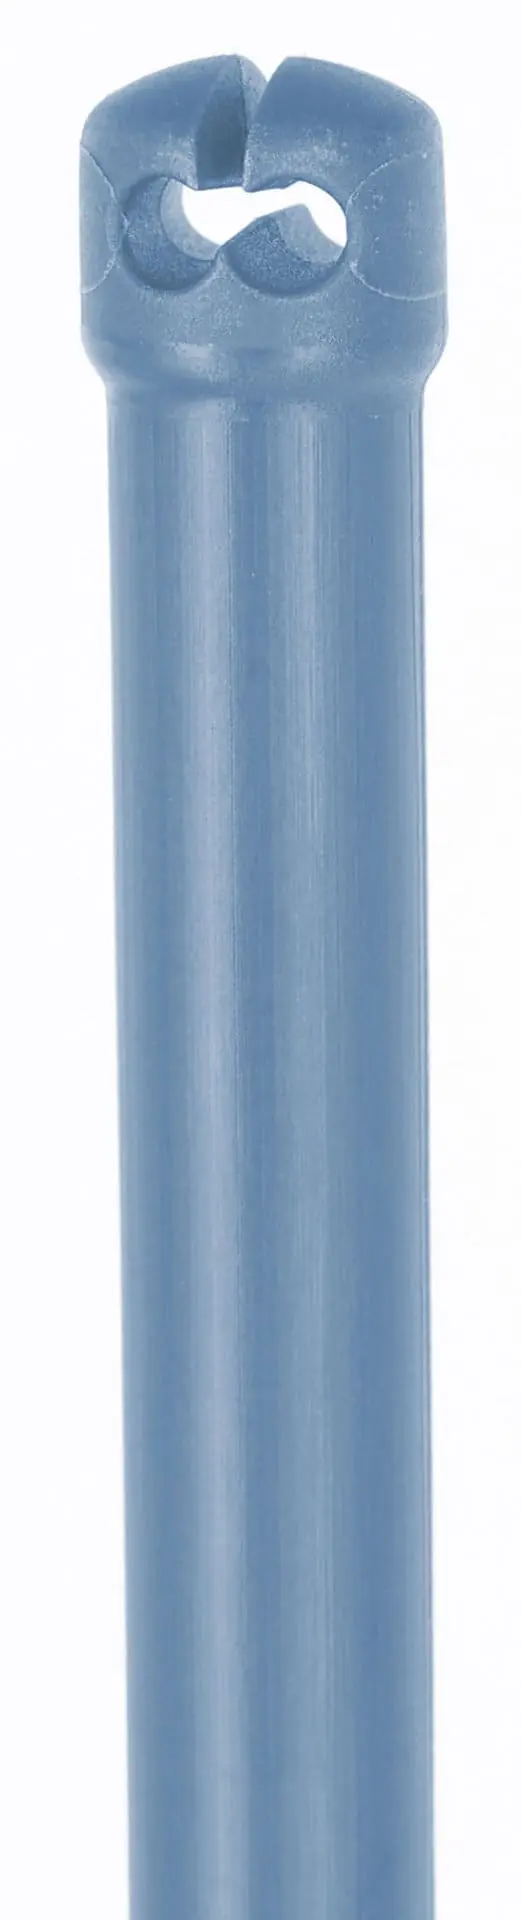 TitanNet Premium, 50m, orange/blue,108 cm, dbl prong